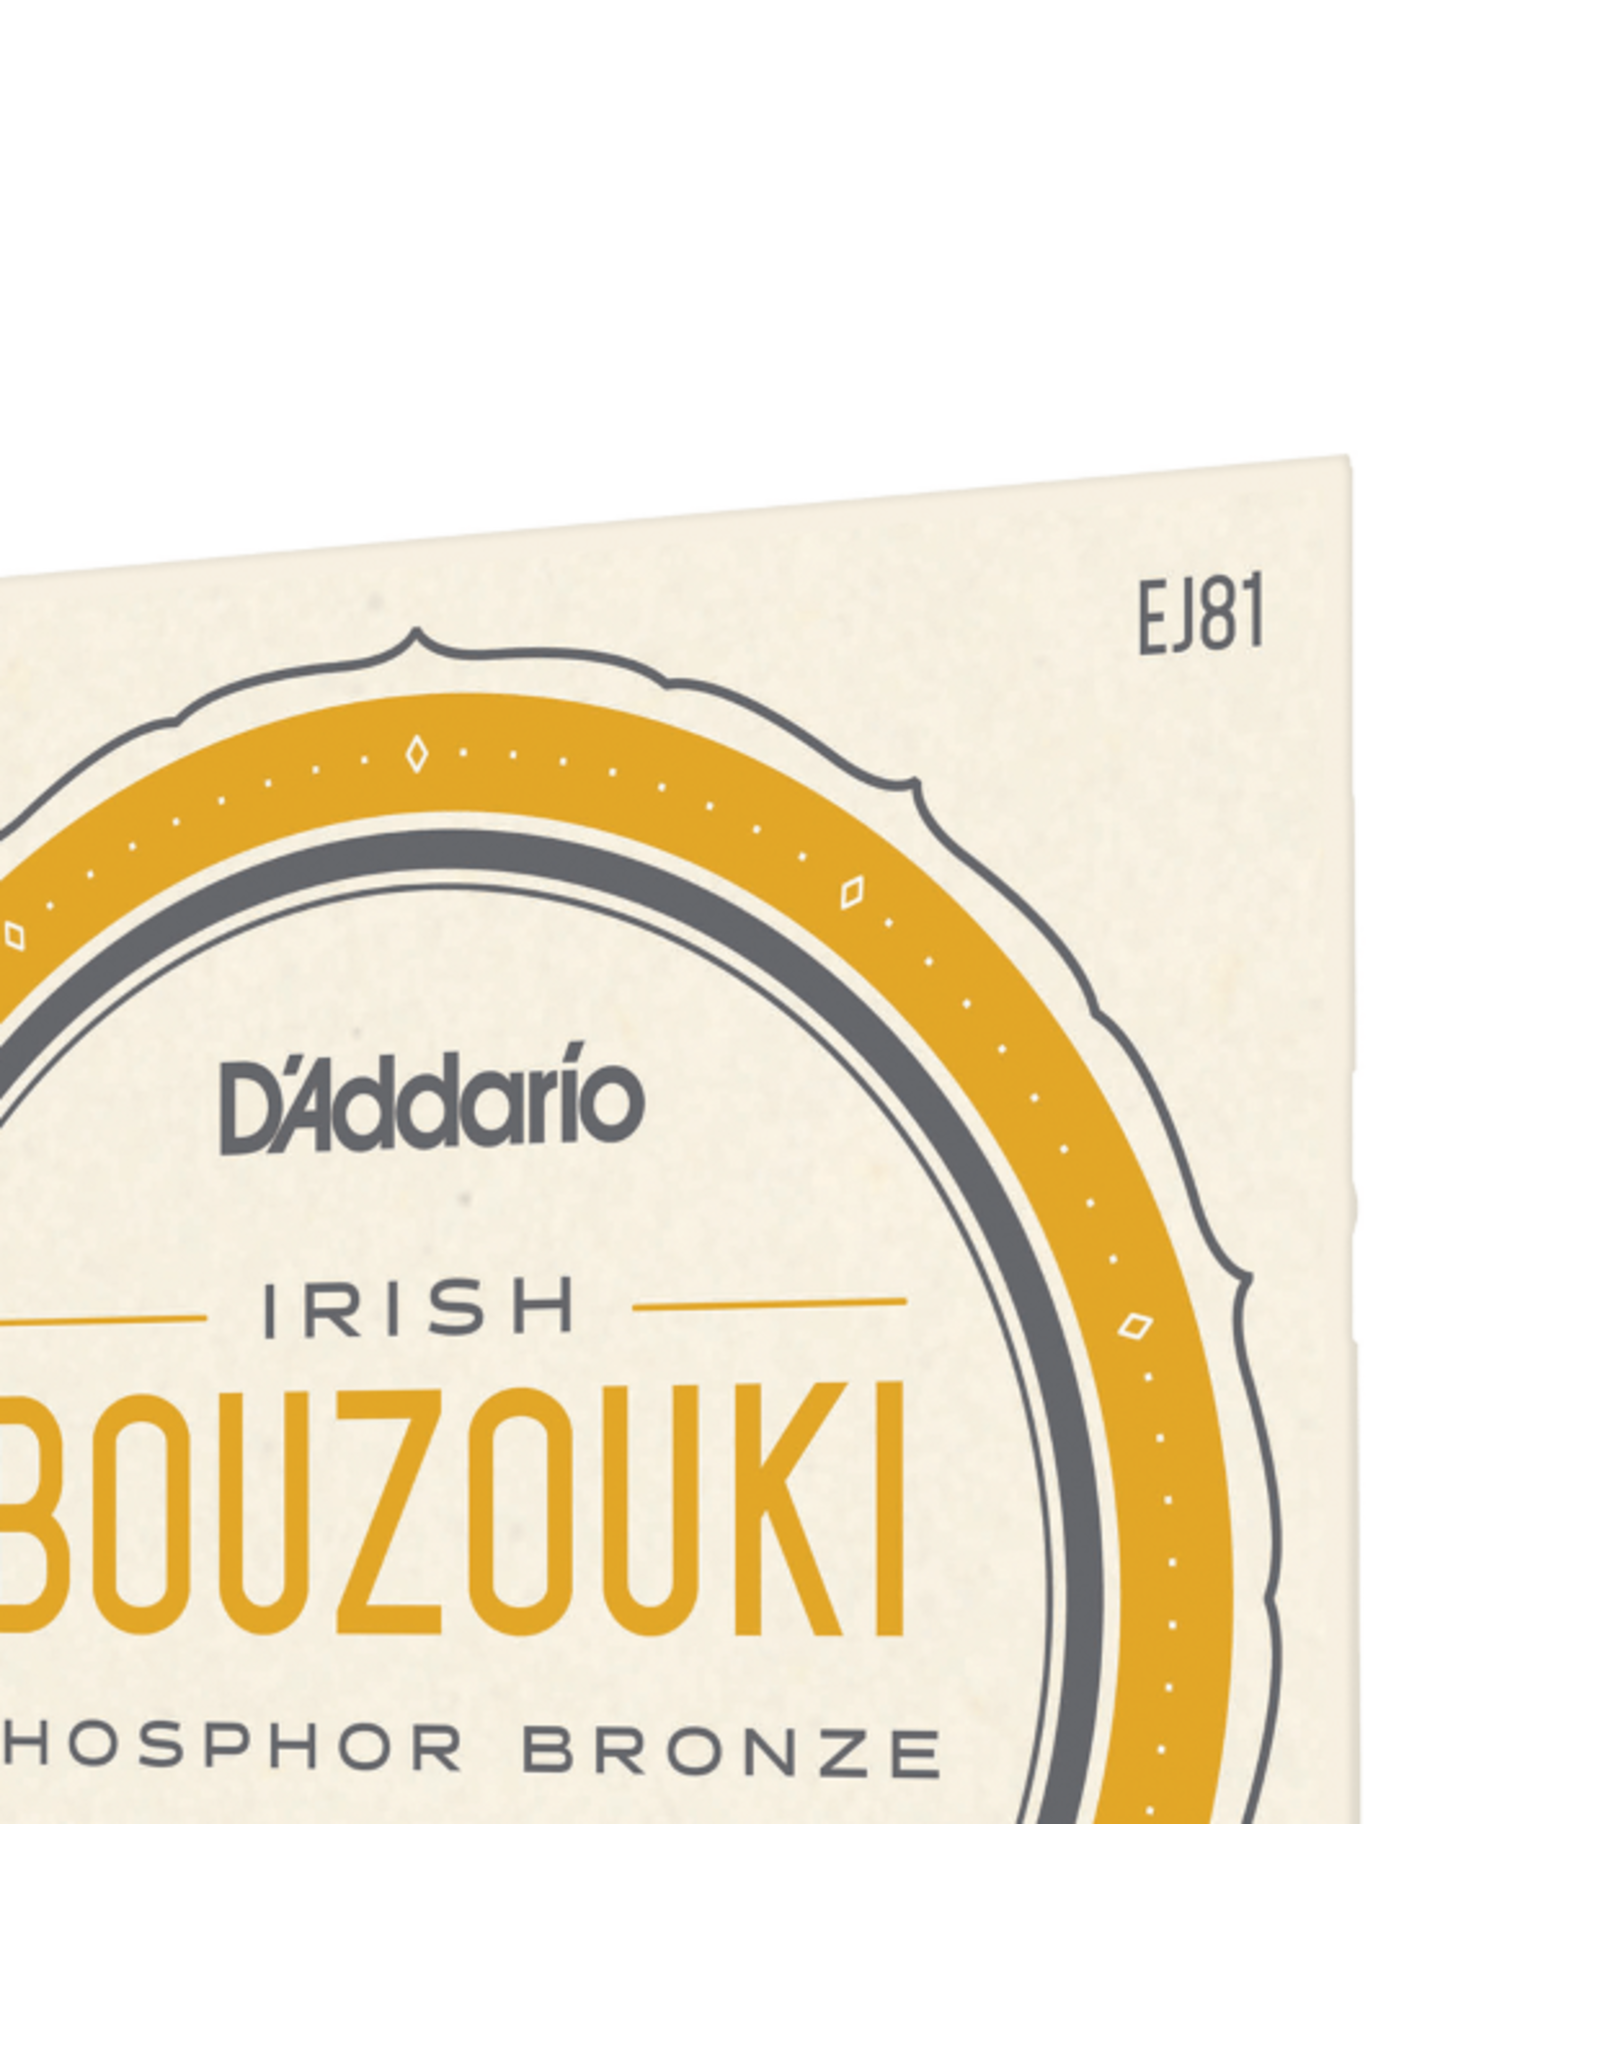 D'Addario D'Addario EJ81 Irish Bouzouki, 8-String, Phosphor Bronze 11-40